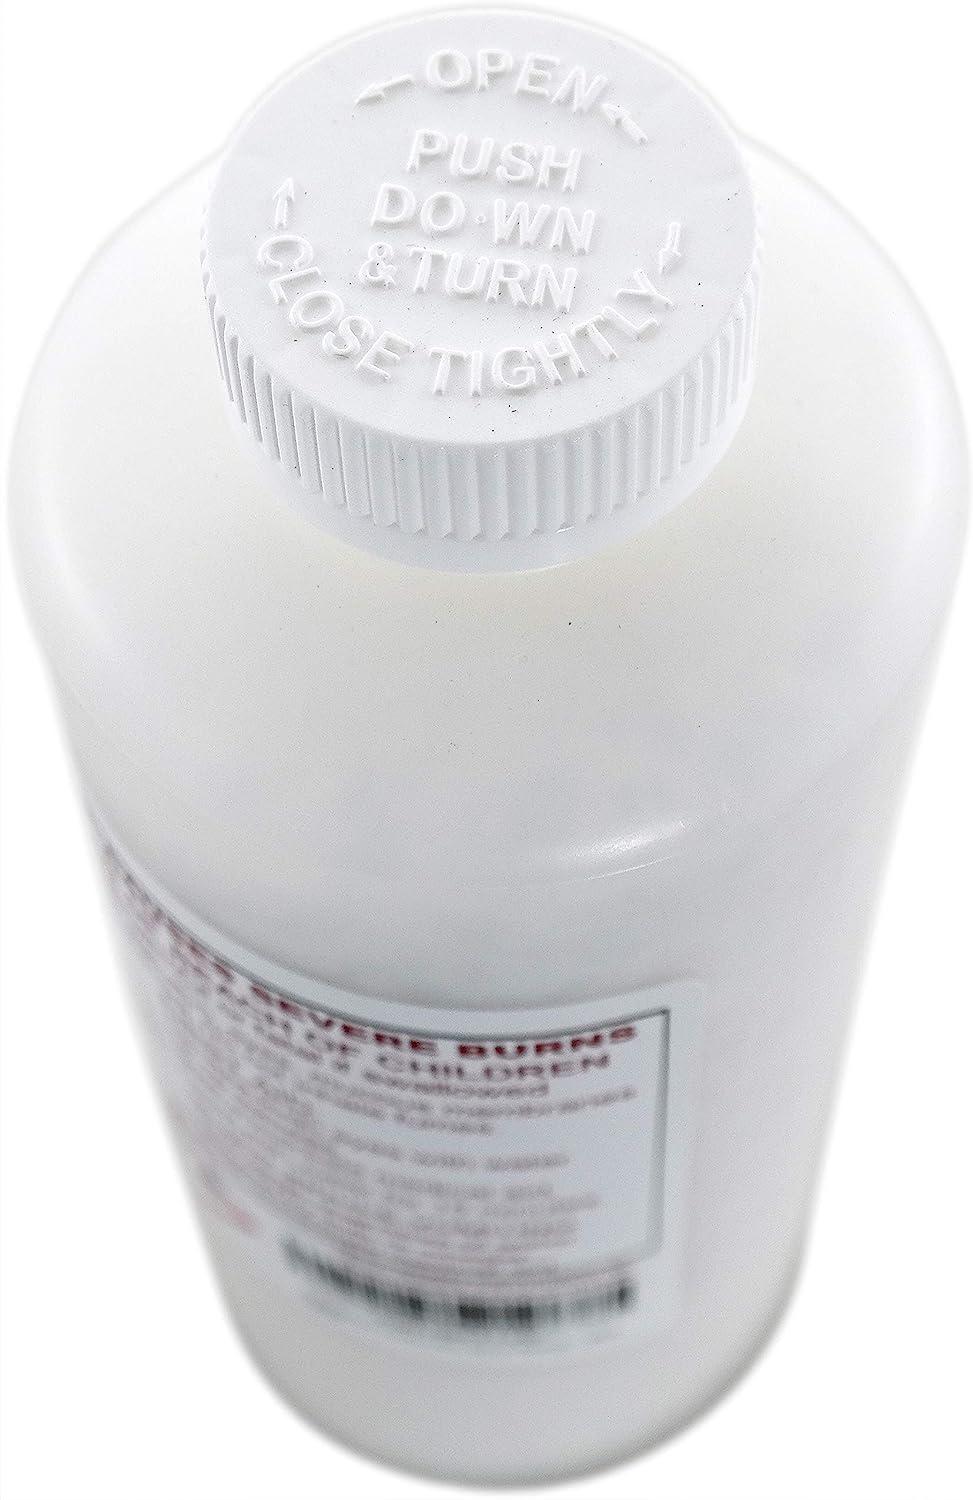 Sodium Hydroxide - Pure - Food Grade (Caustic Soda, Lye) (10 pound